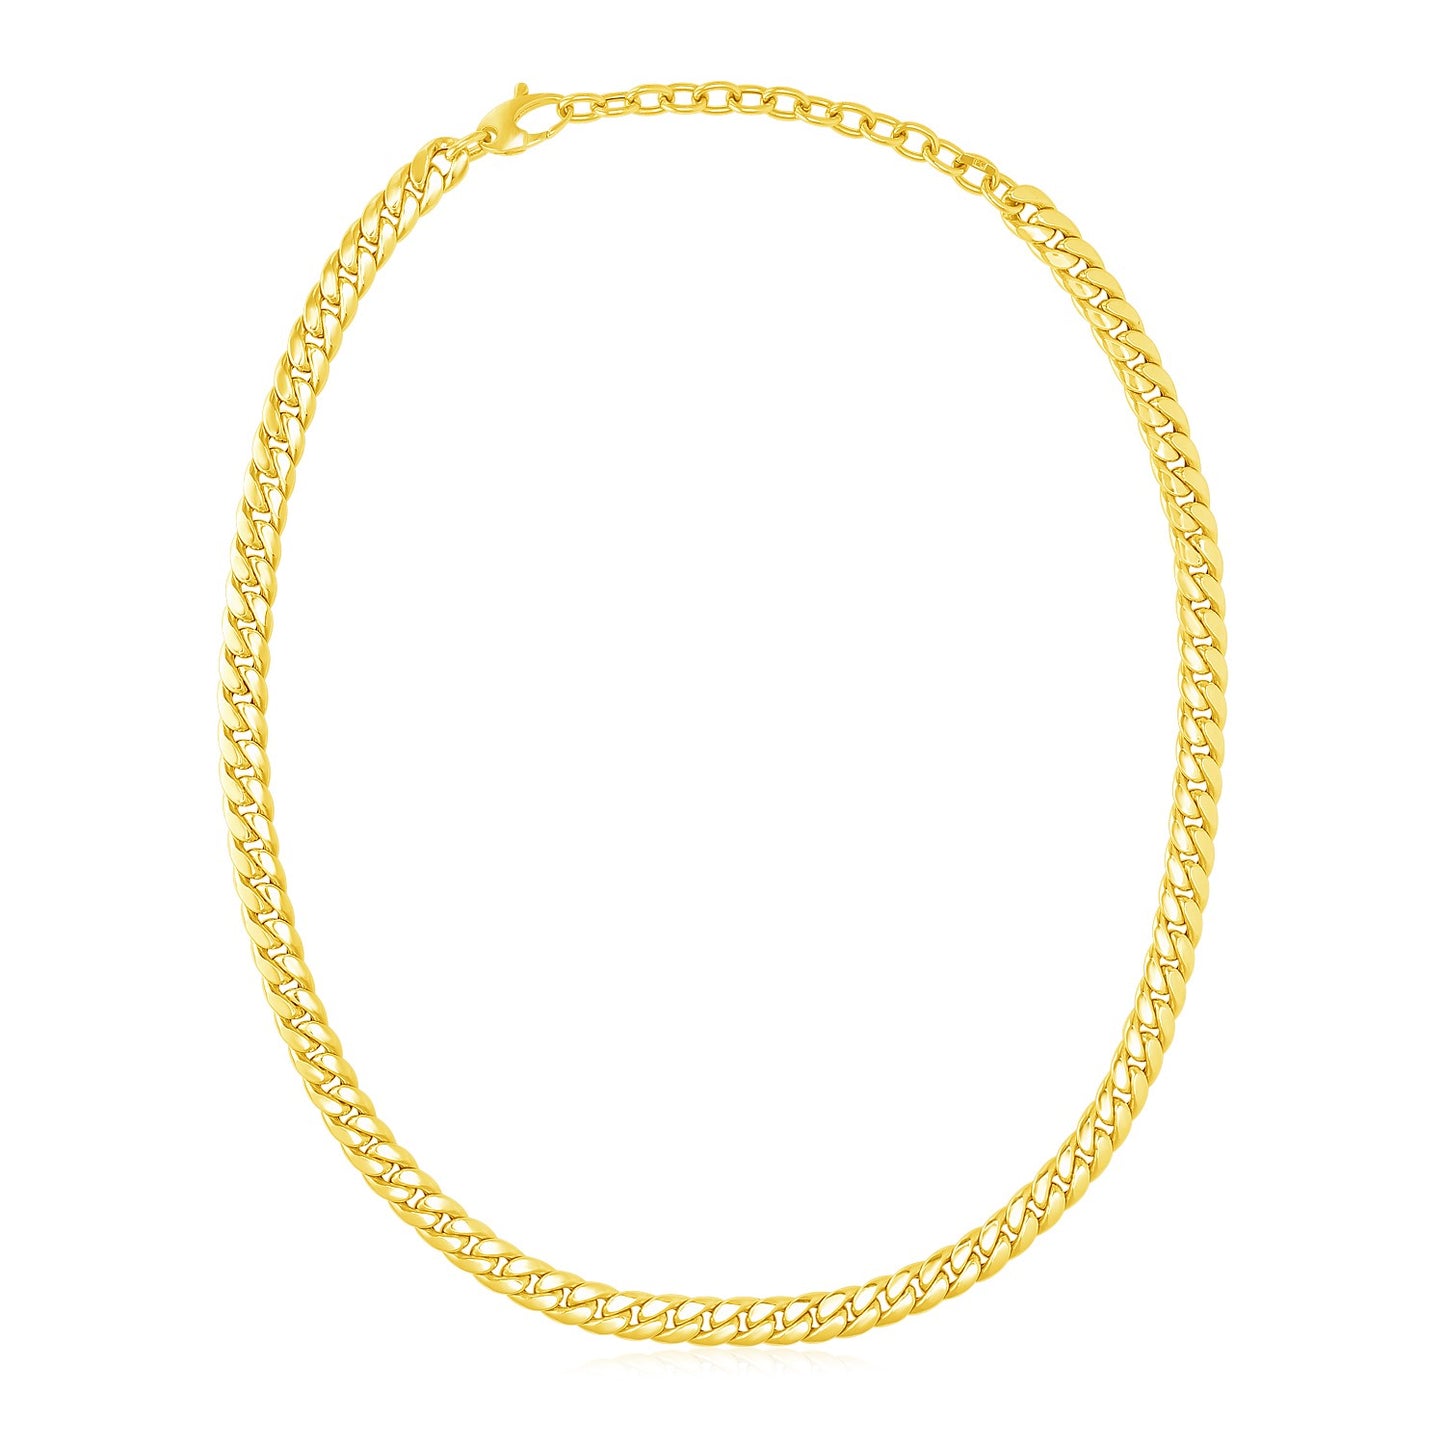 14k Yellow Gold Cuban Chain Choker Necklace